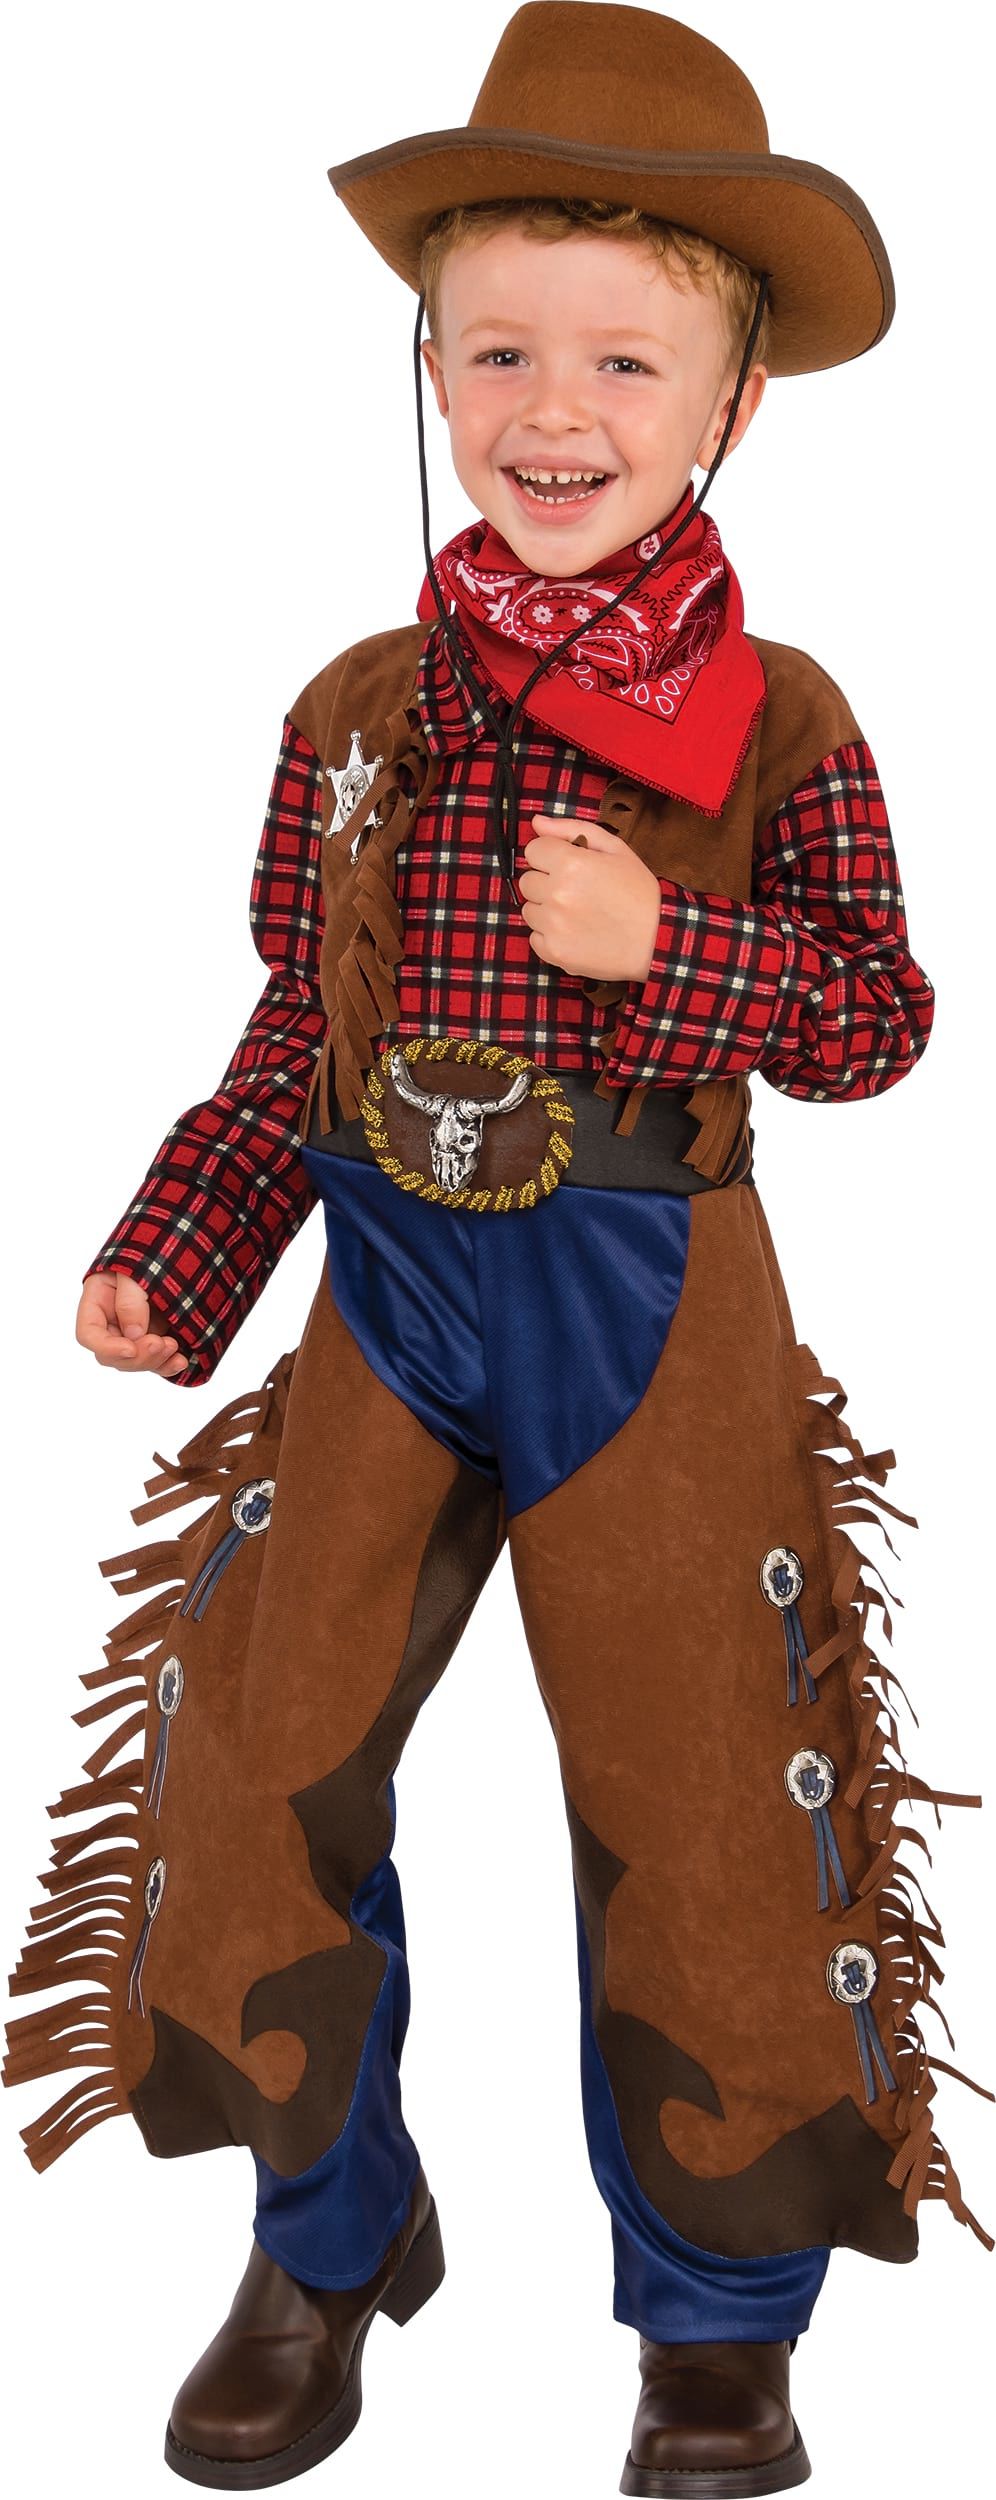 Kids Little Wrangler Cowboy Costume | $23.99 | The Costume Land